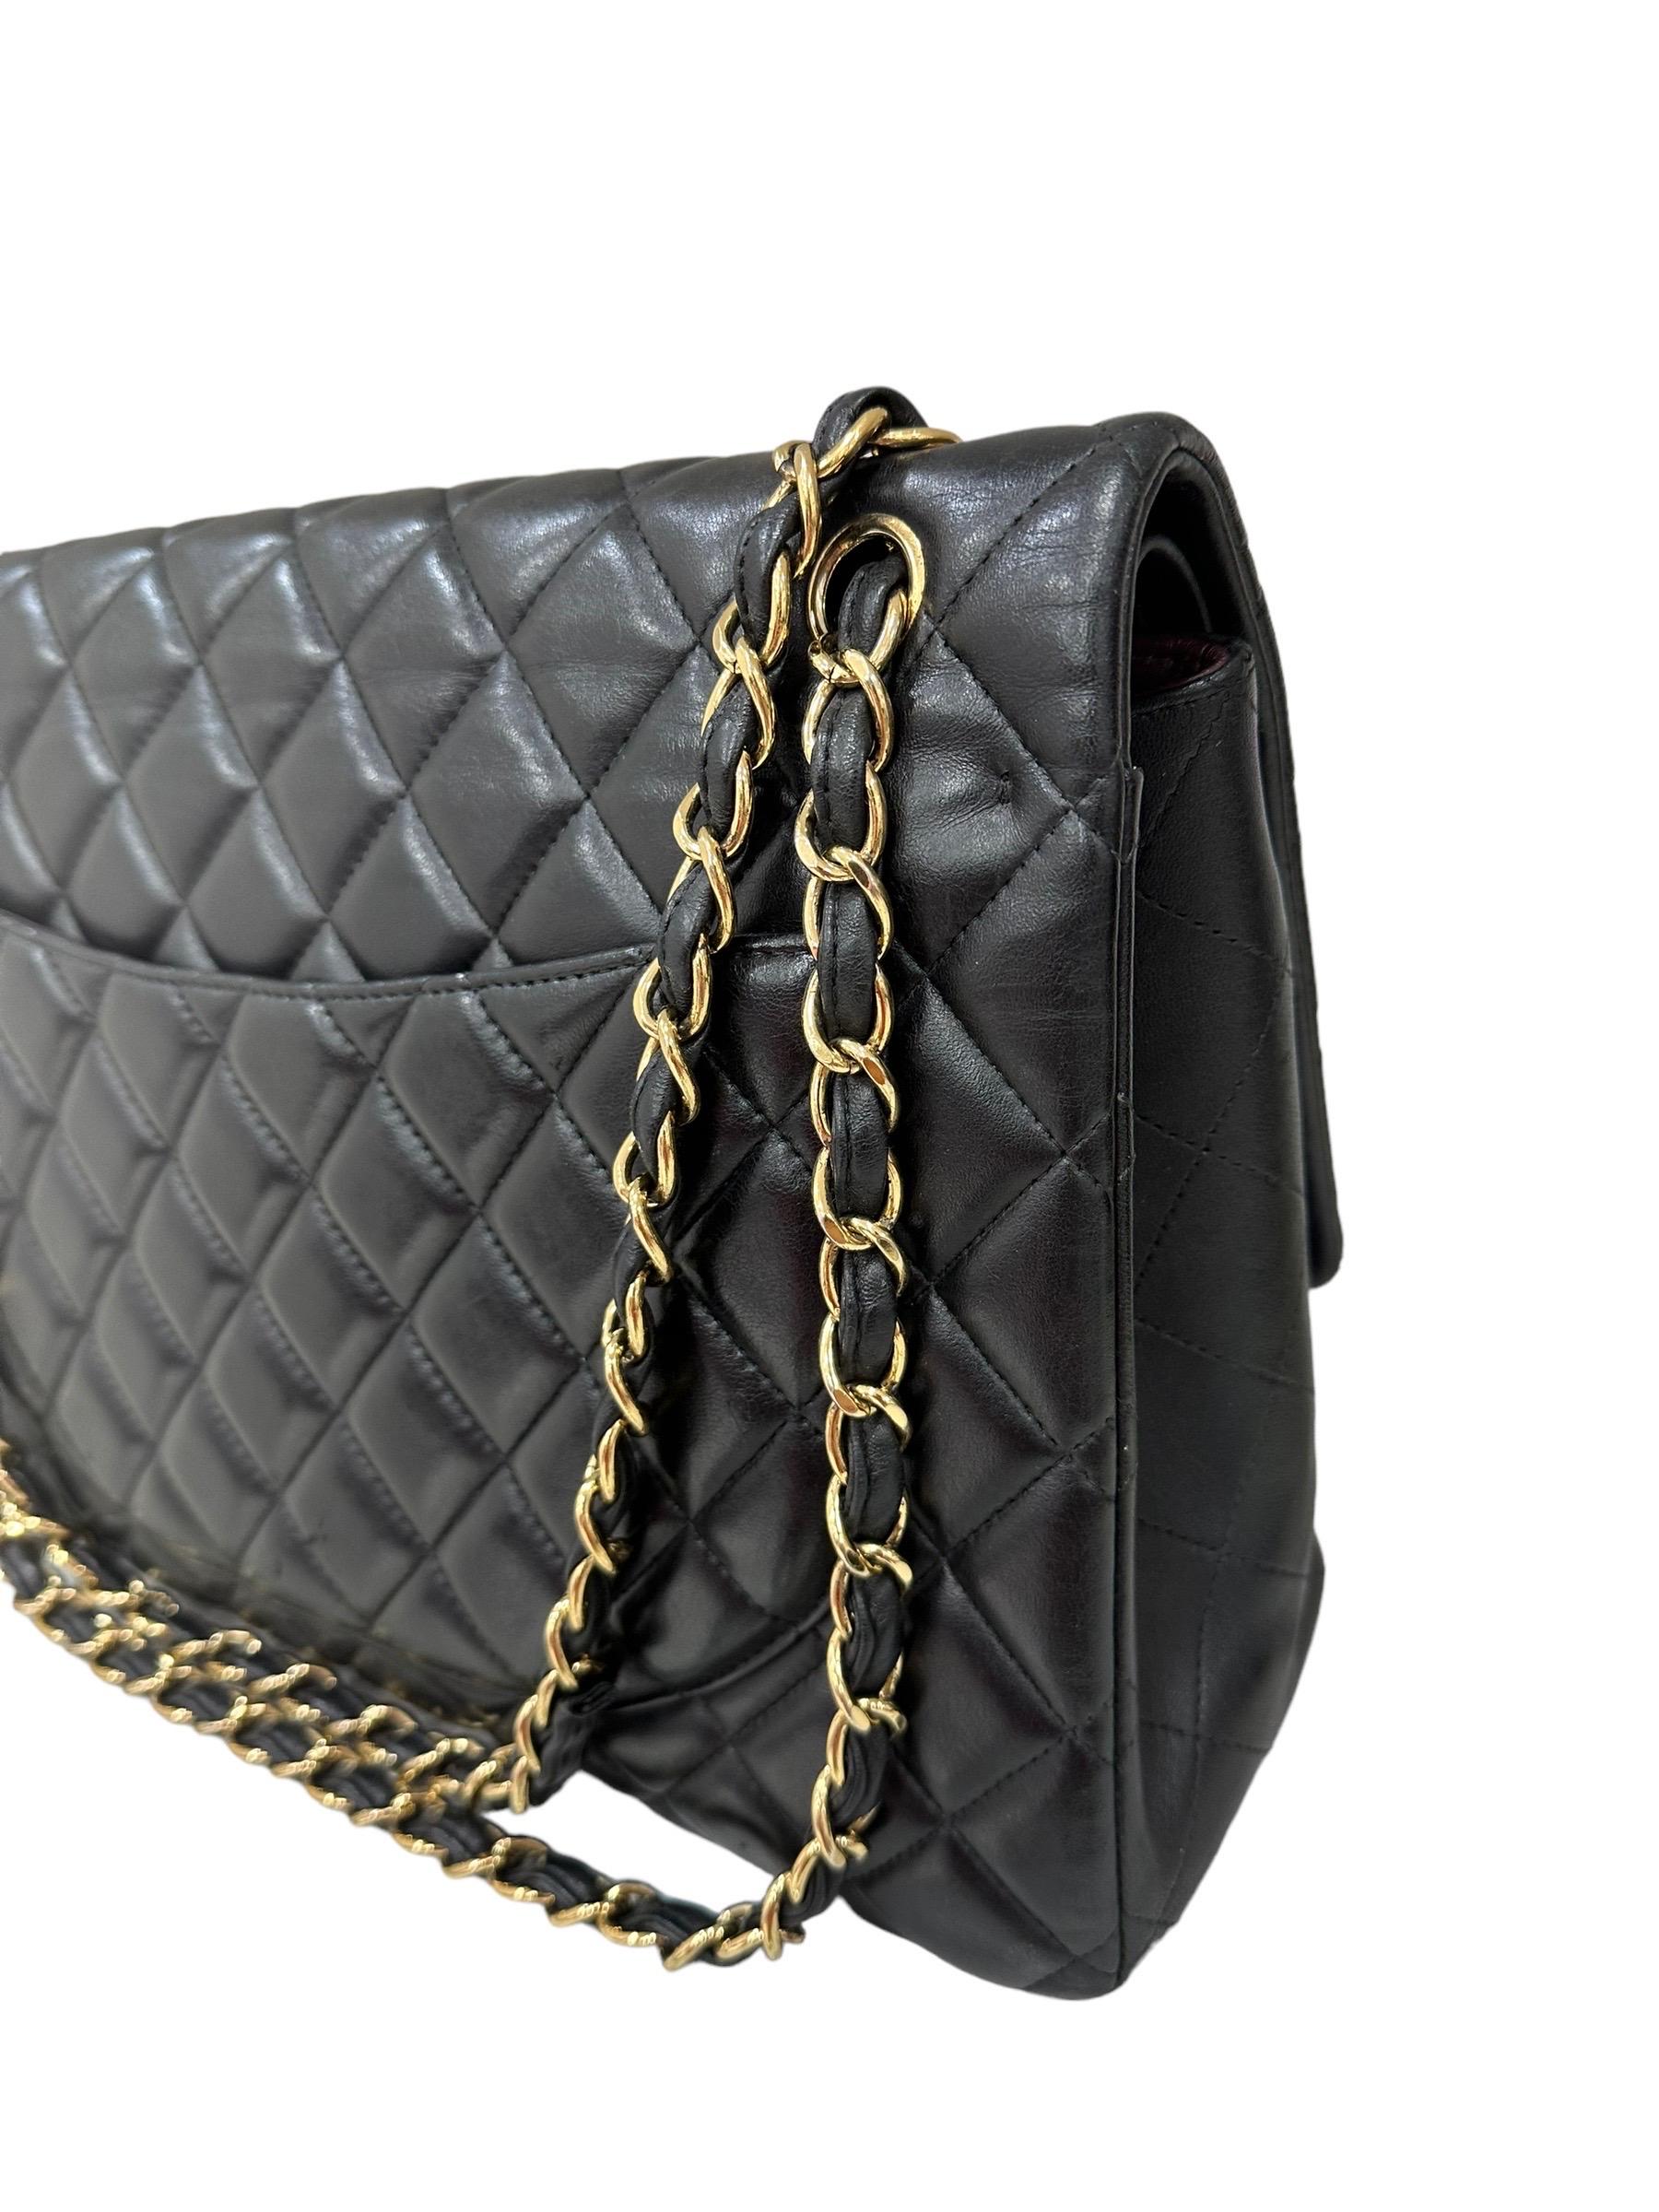 2011 Chanel Timeless Maxi Jumbo Black Leather Top Shoulder Bag 2